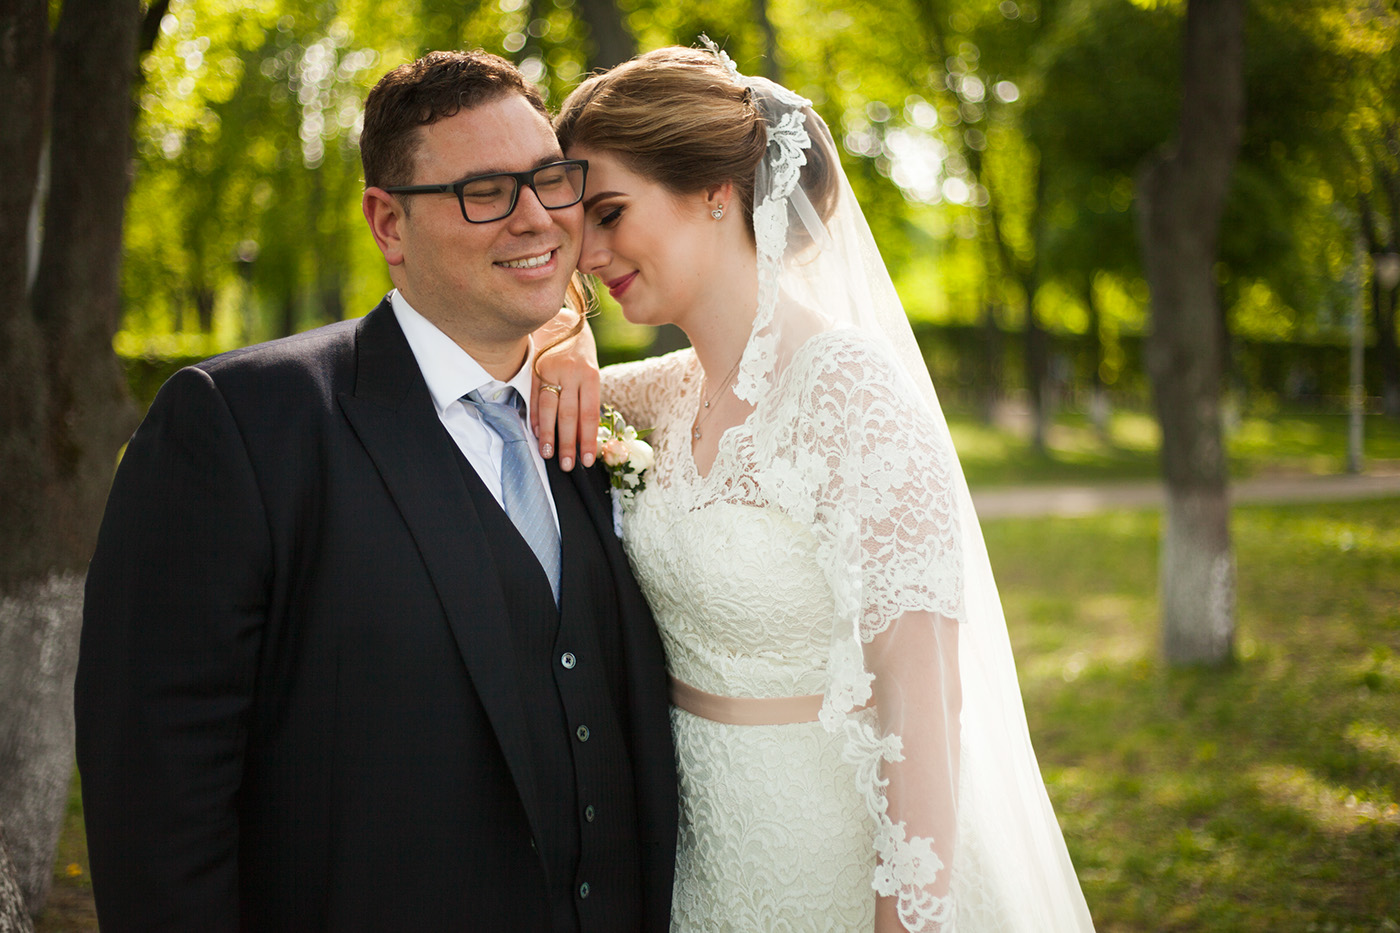 Photography  photographer wedding art Love people photo ukraine Italy